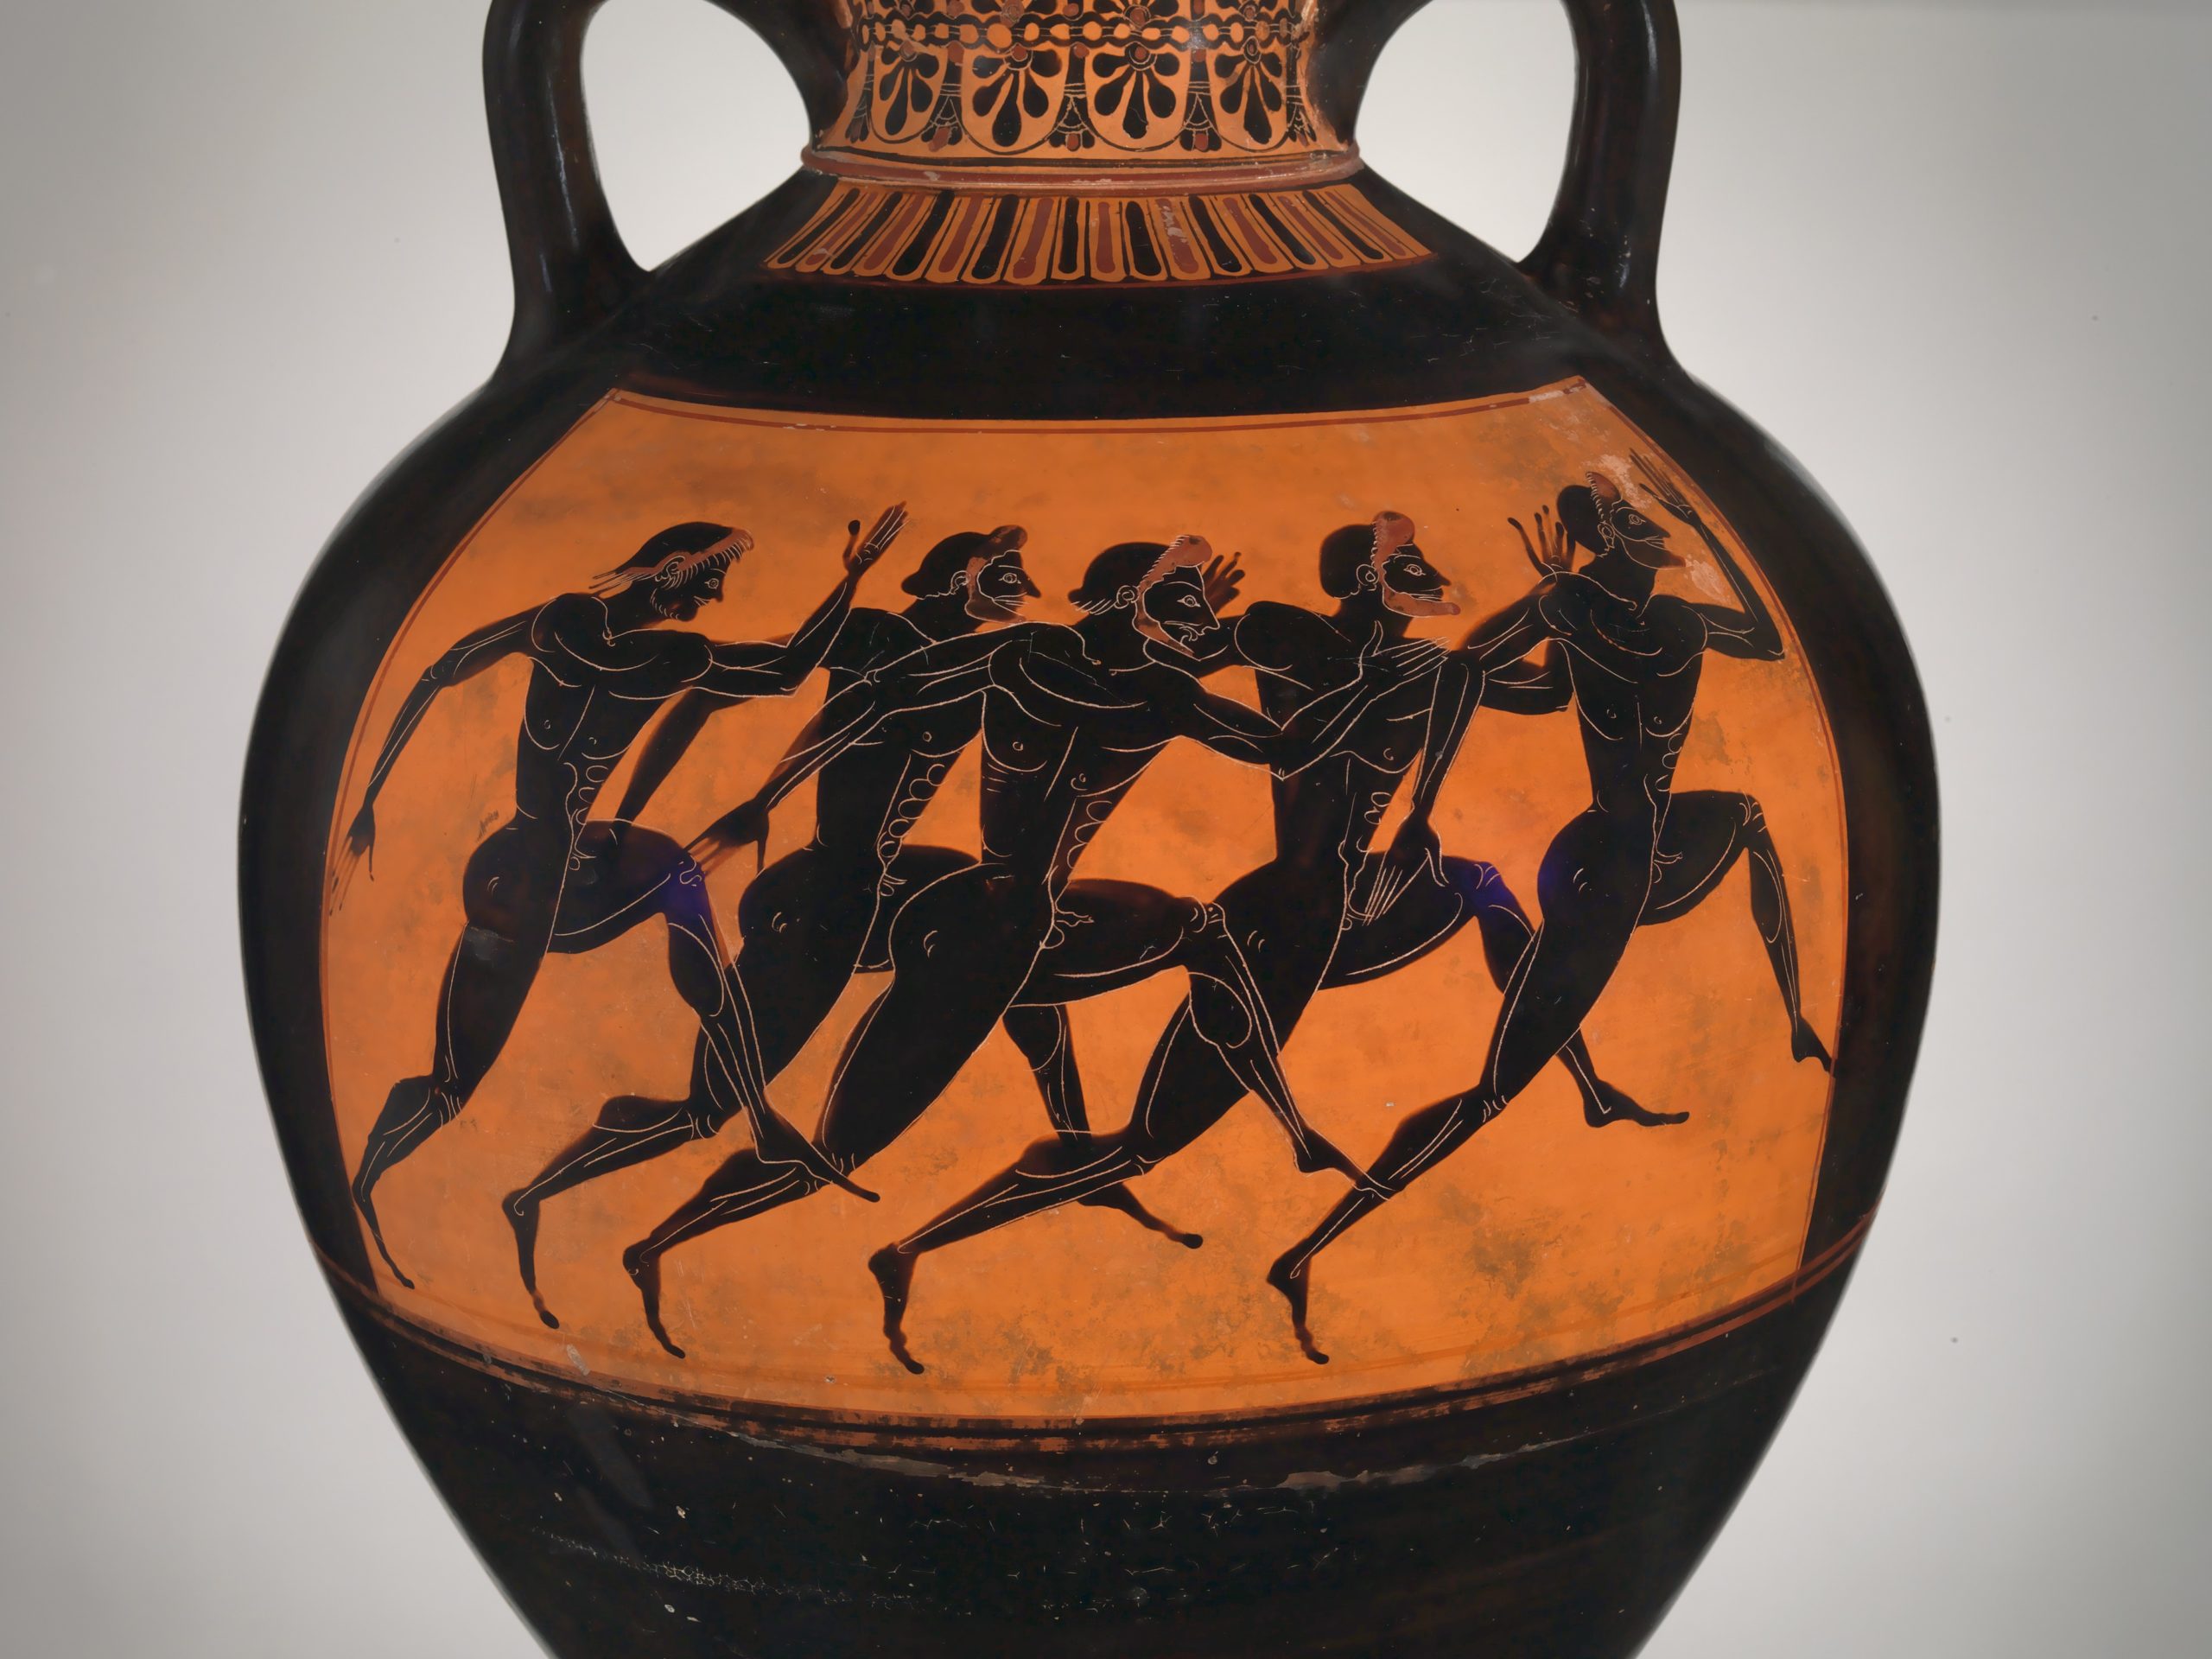 Greek vase with foot race